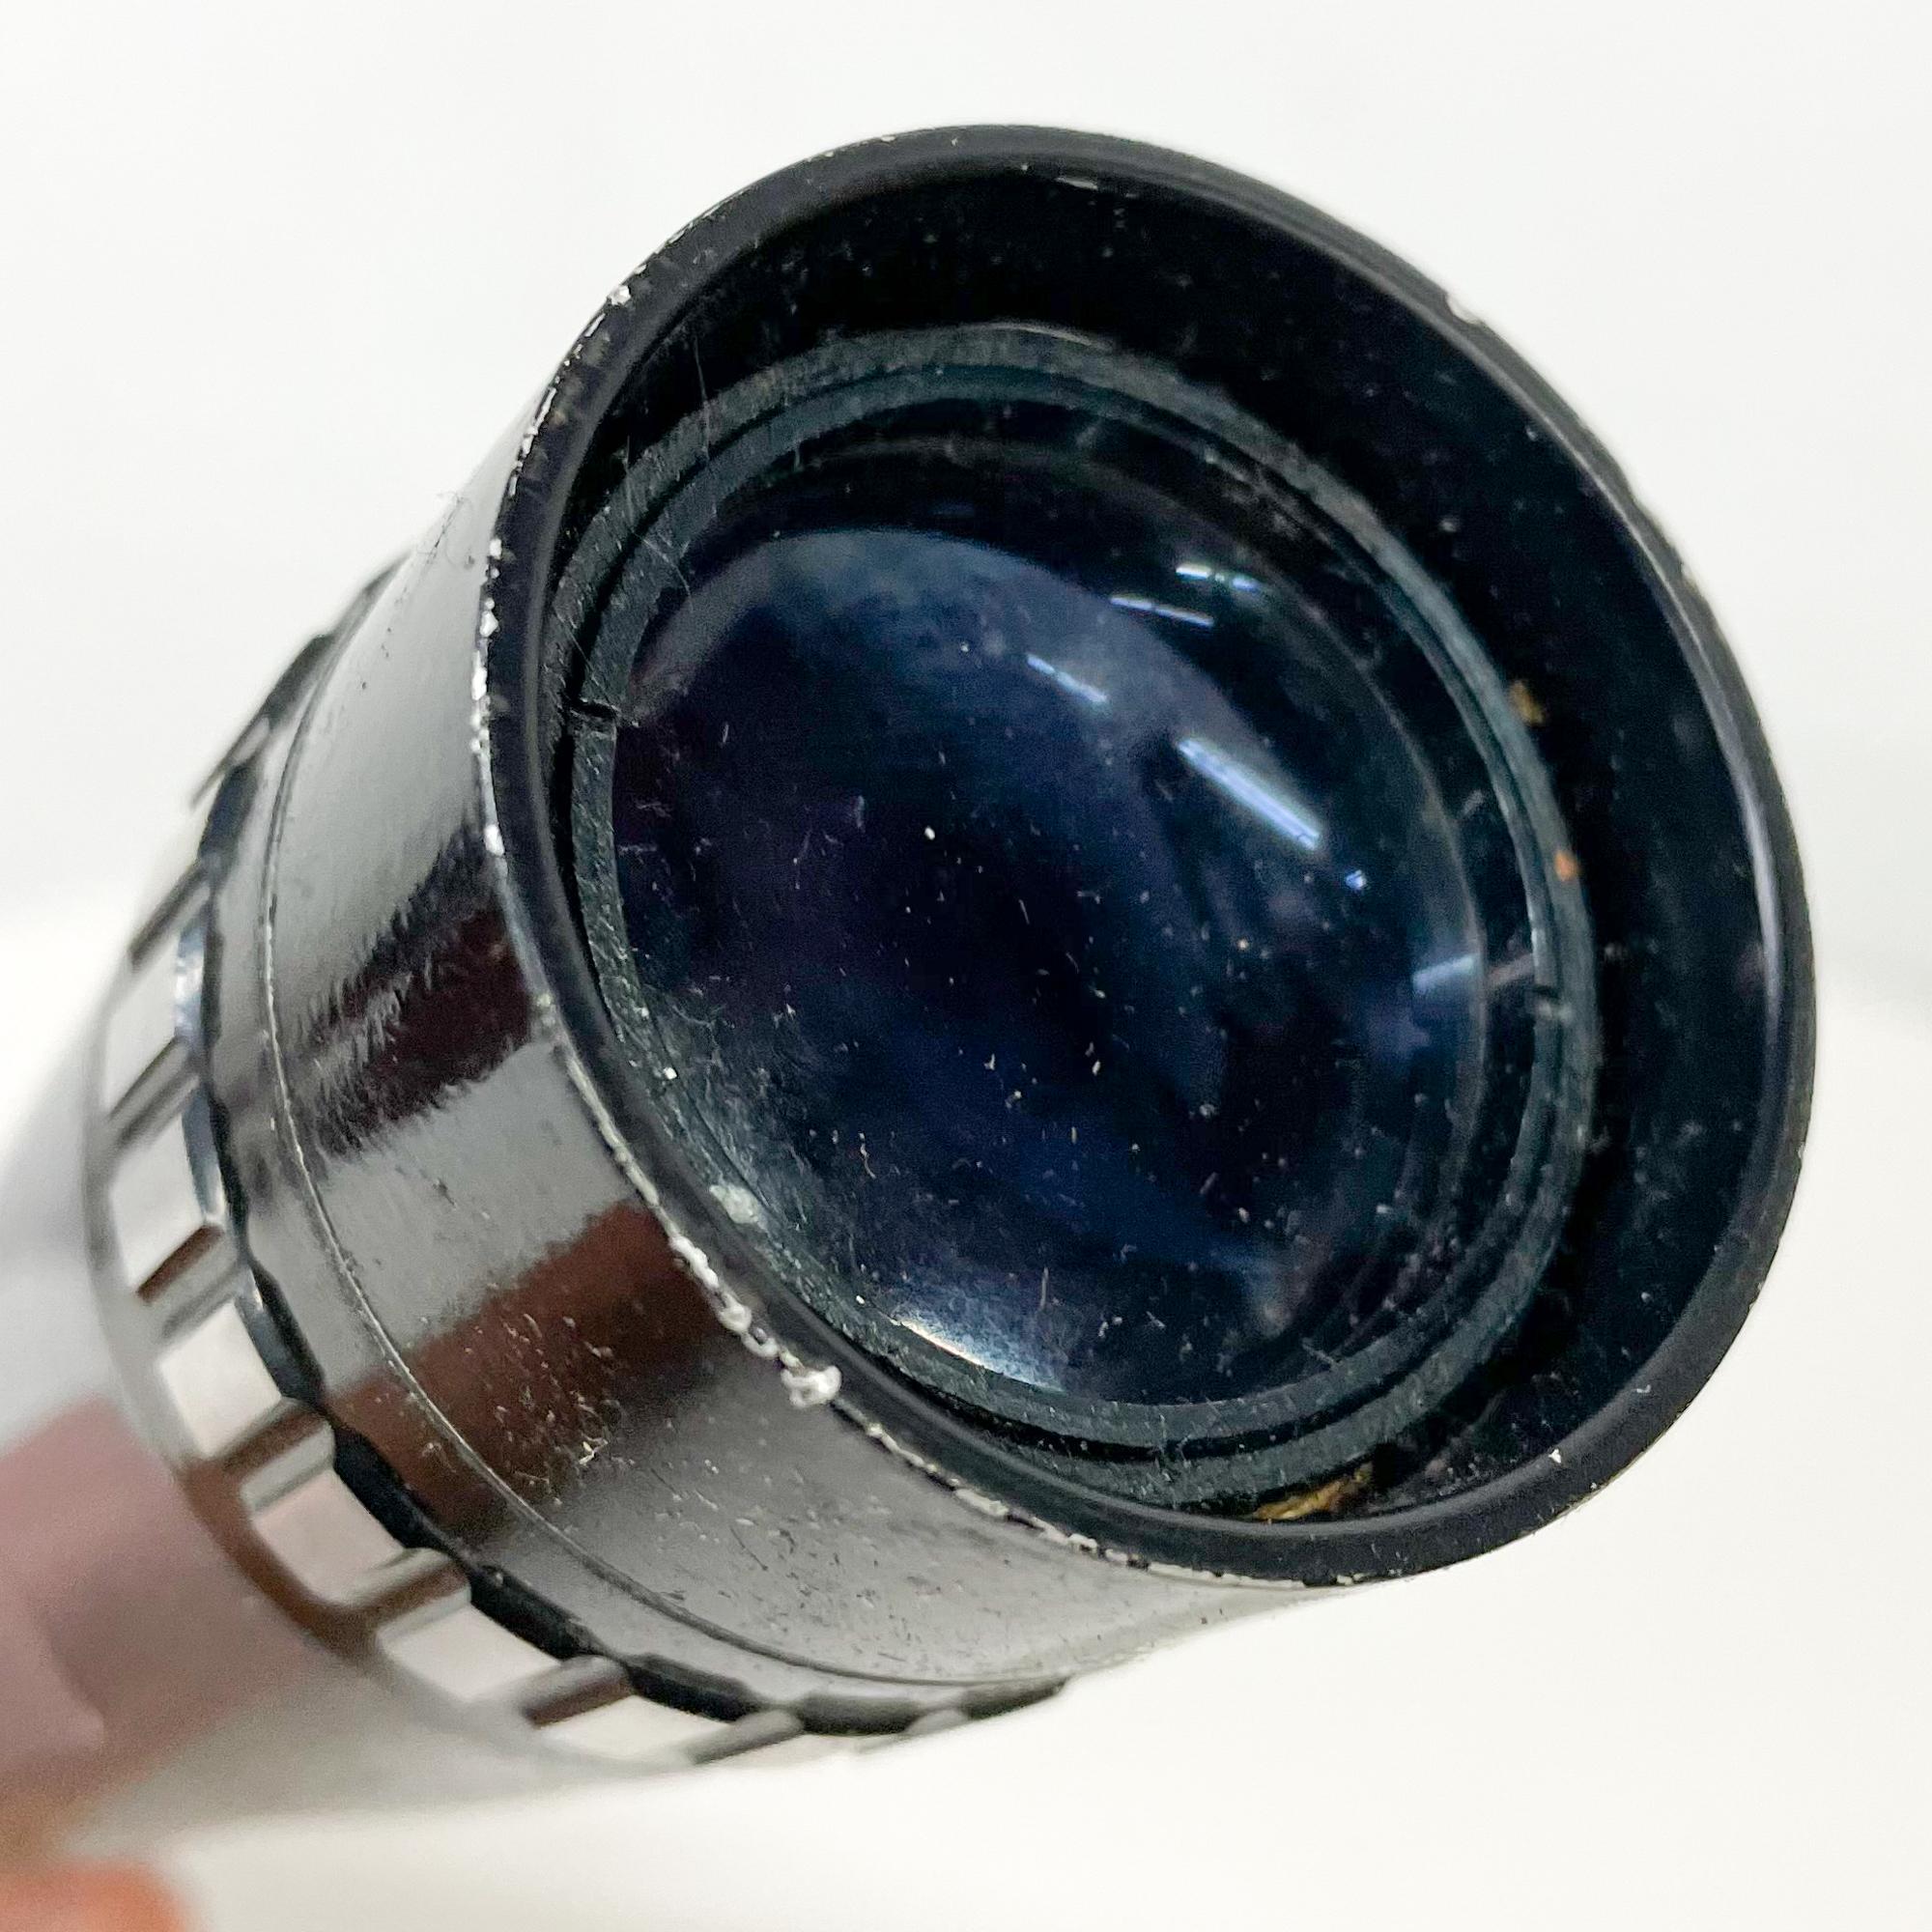 Metal 1970s Industrial Old TASCO Zoom Telescope with Original Box Quality Optics